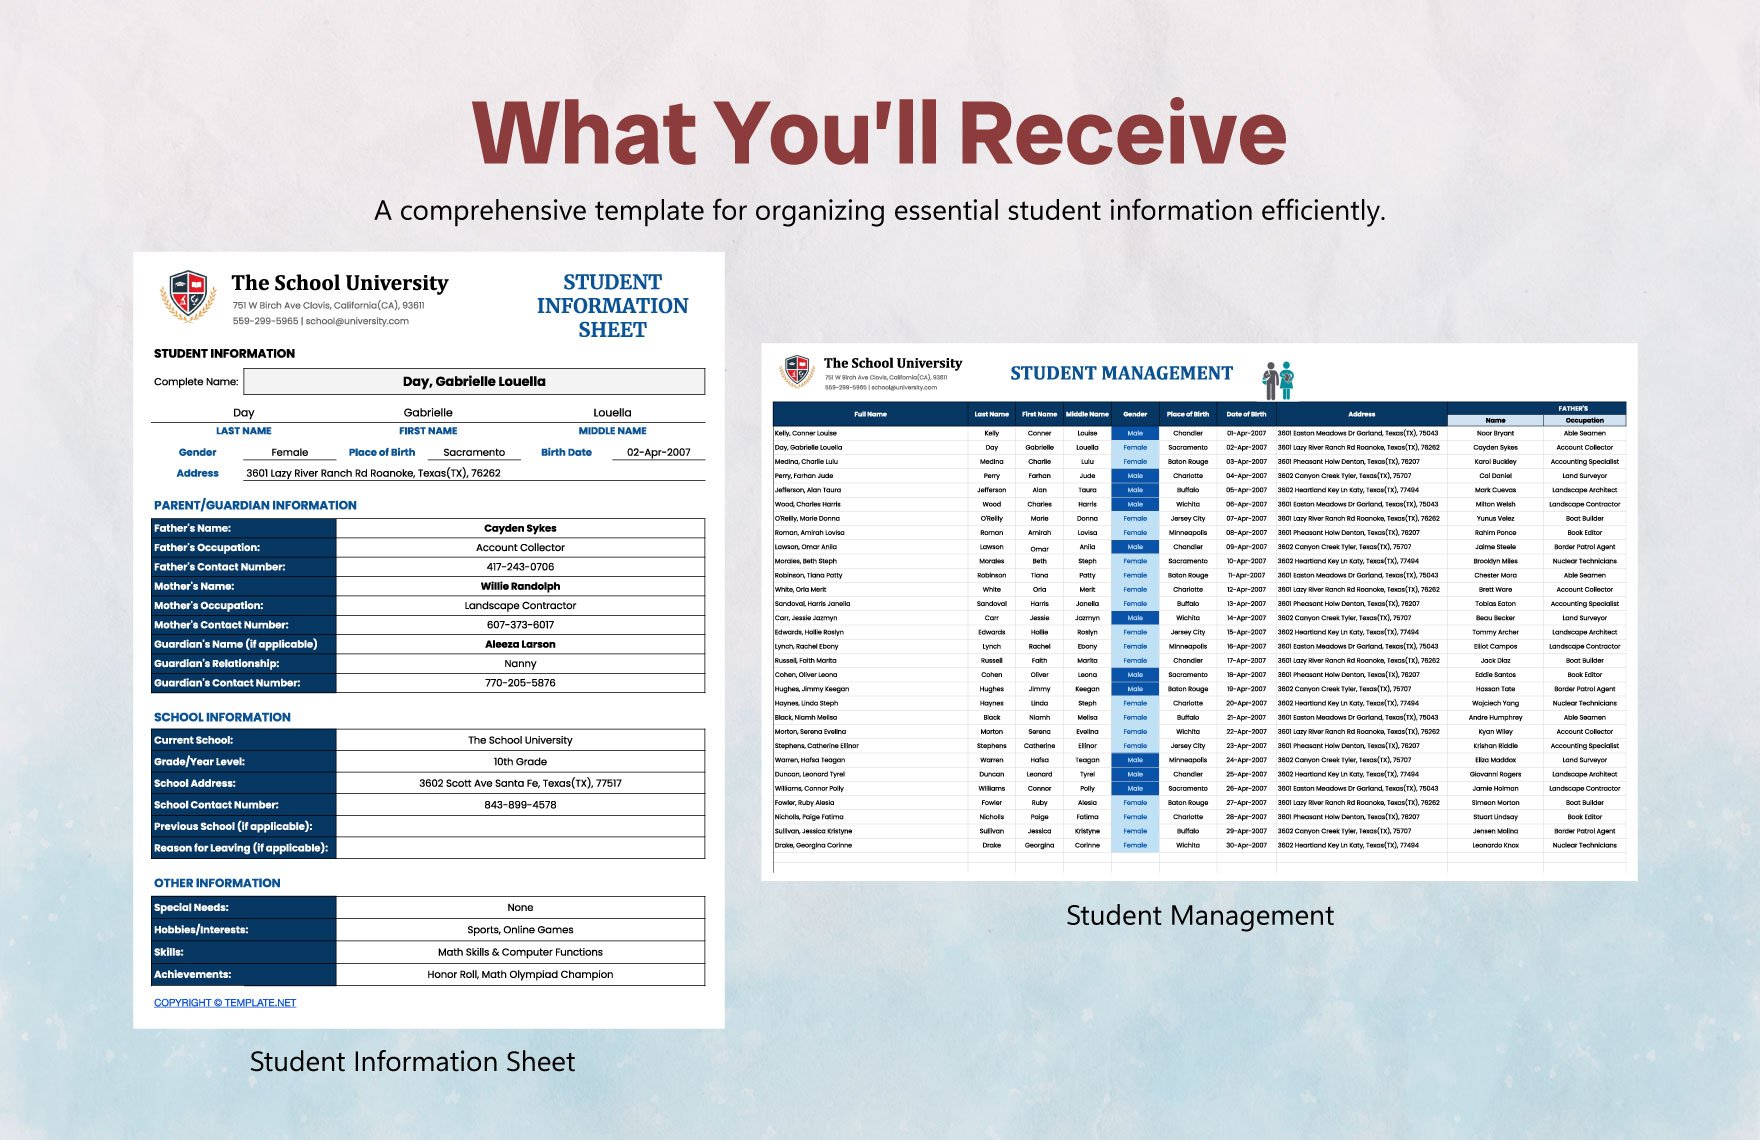 Student Information Sheet Template